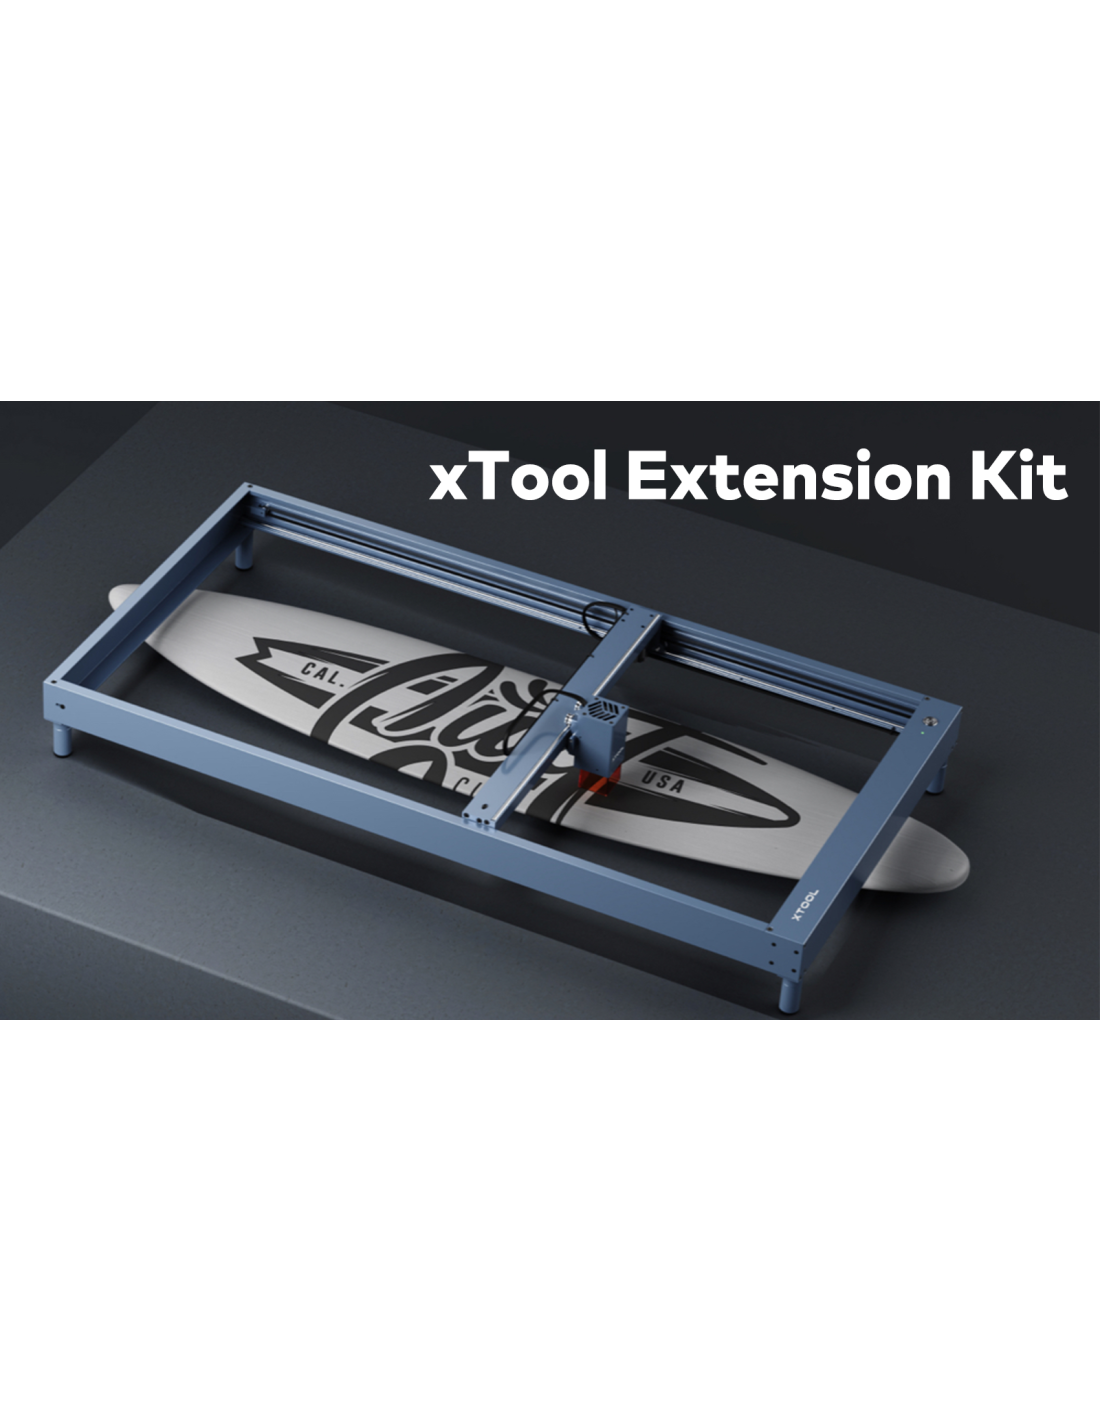 xTool D1 Extension Kit